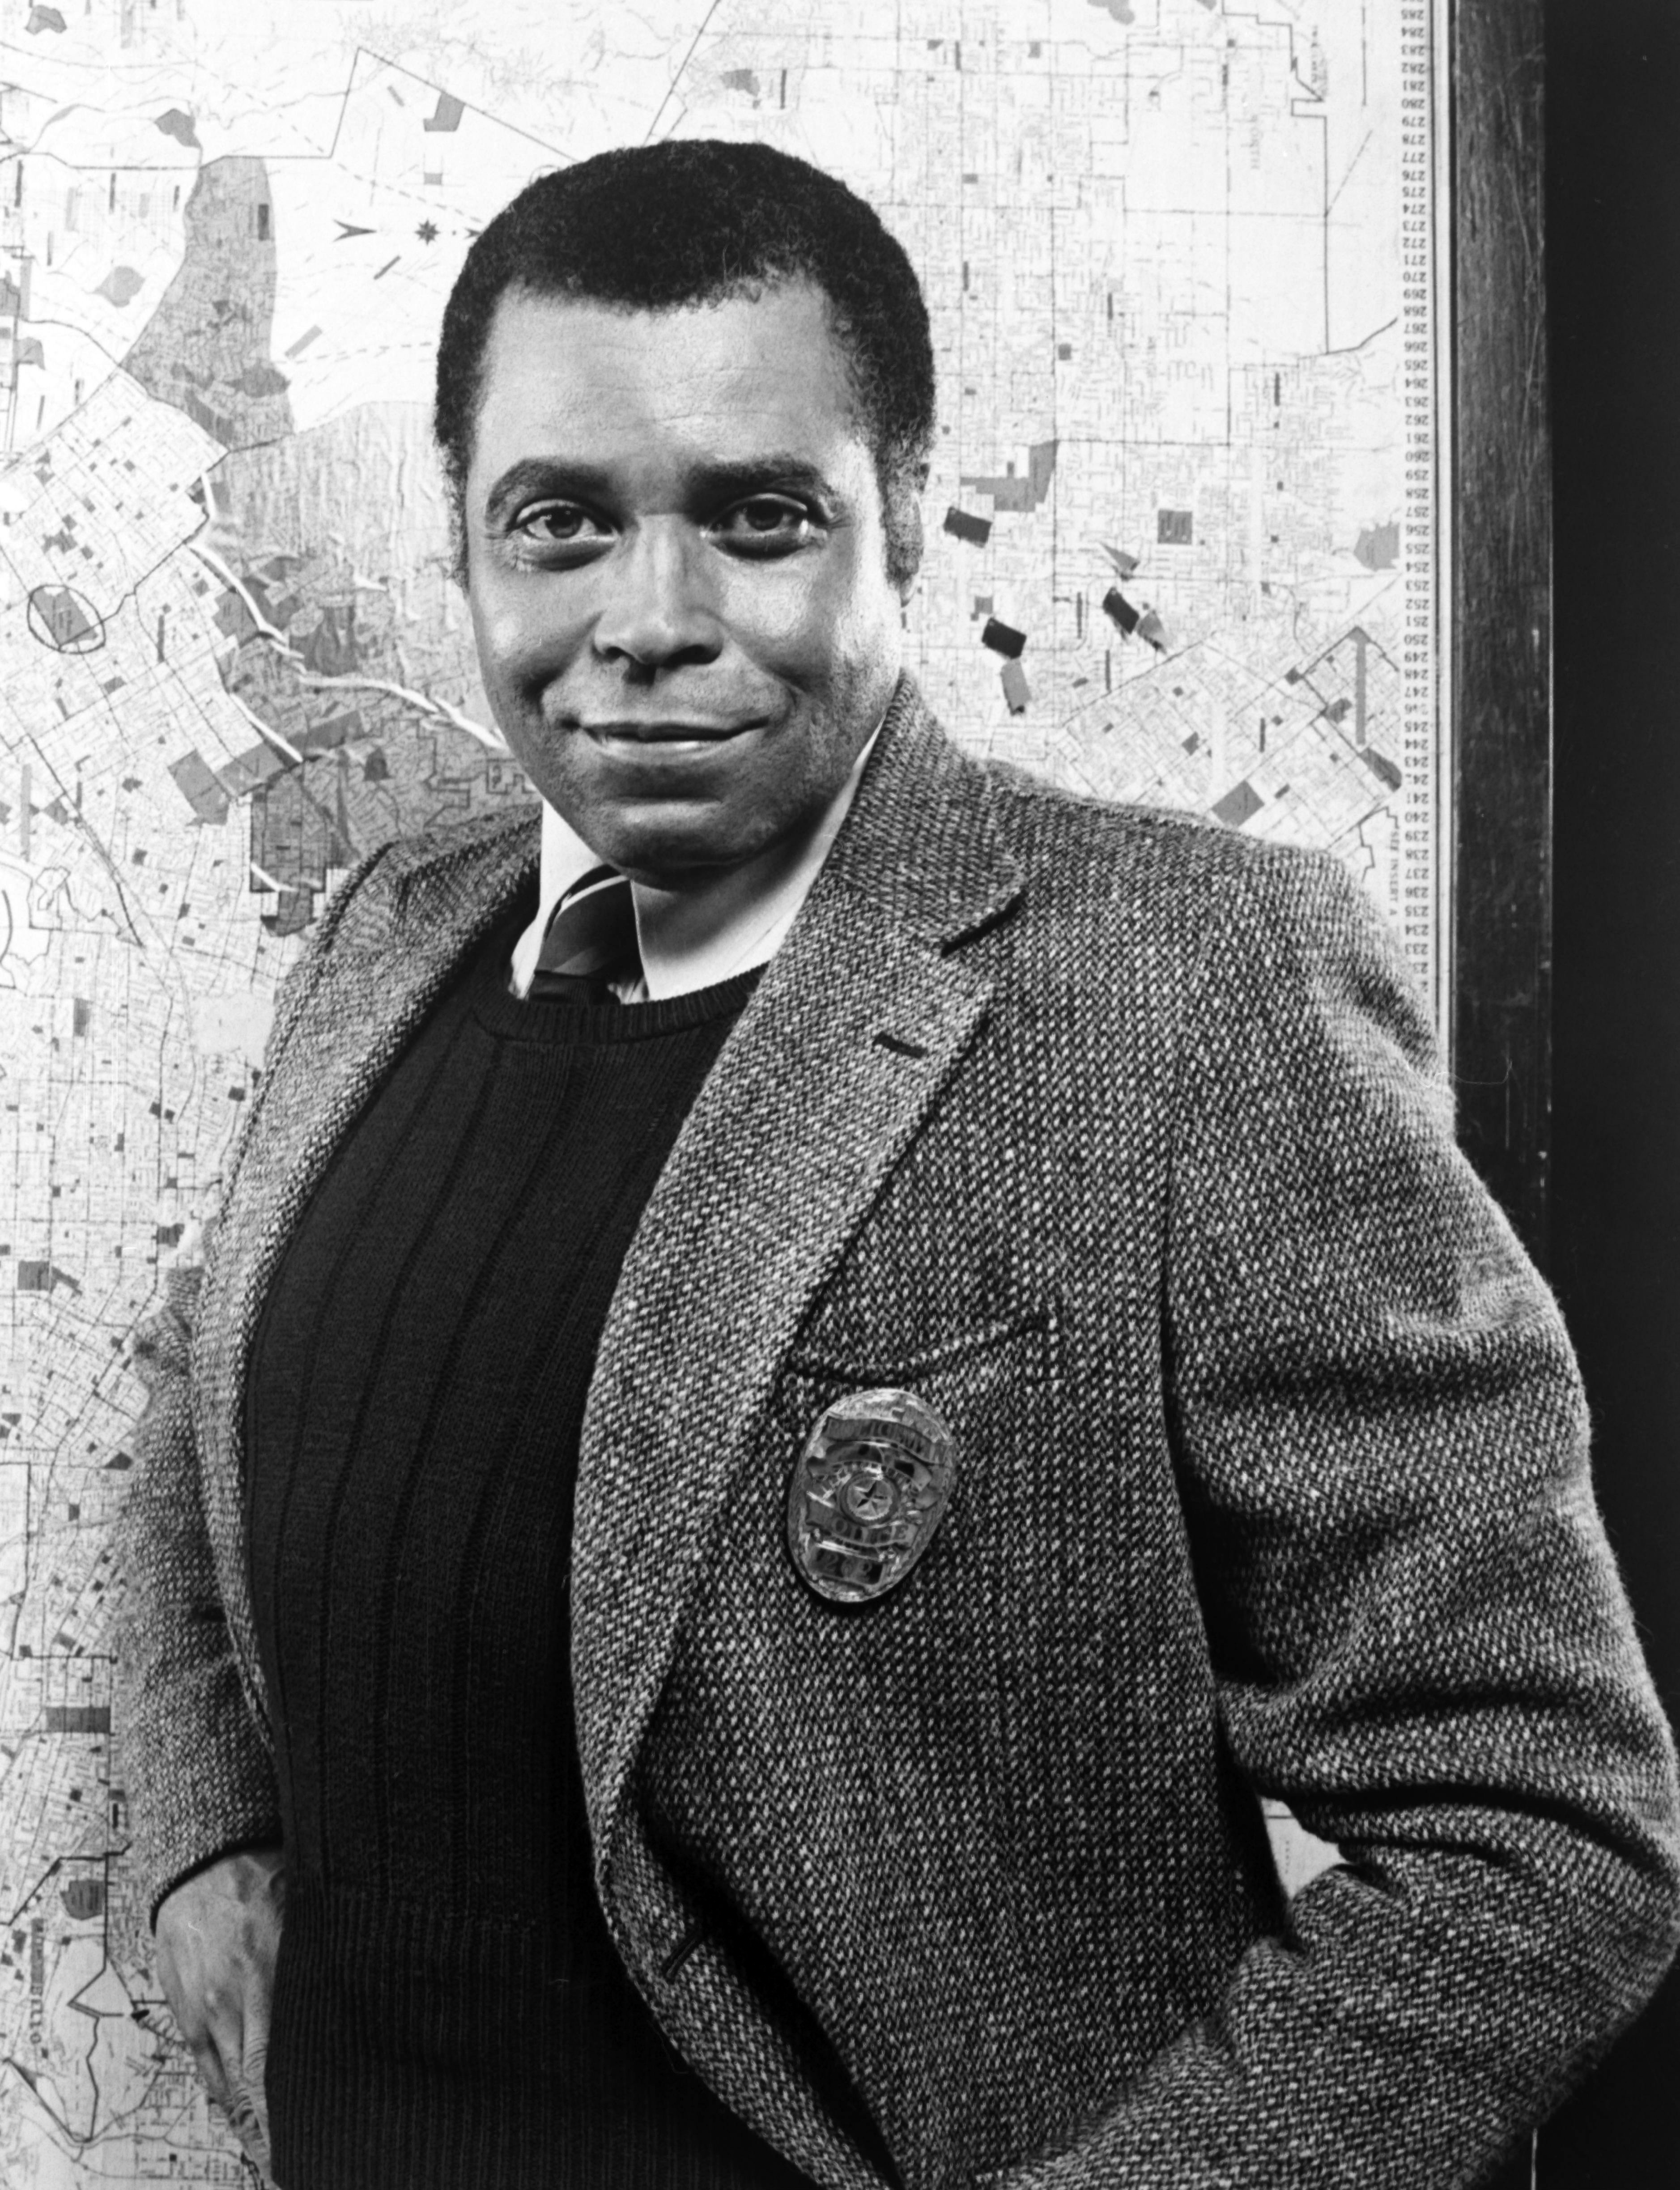 James Earl Jones wearing law enforcement badge, in the 1970s. | Source: Getty Images